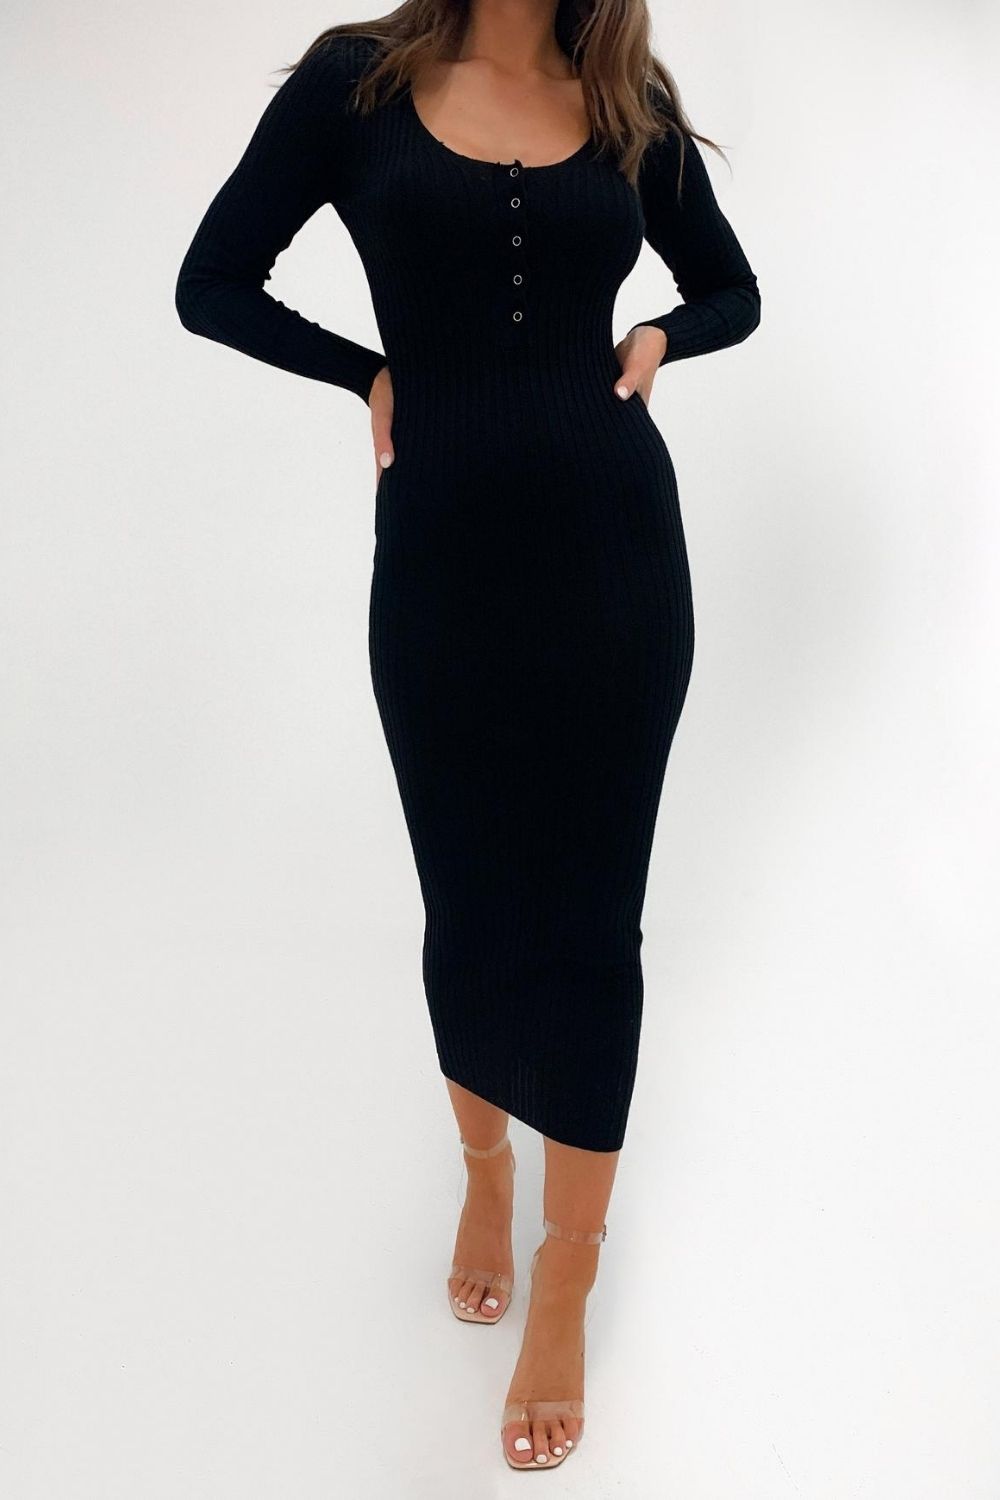 Midi Bodycon Black Dress – Styched Fashion